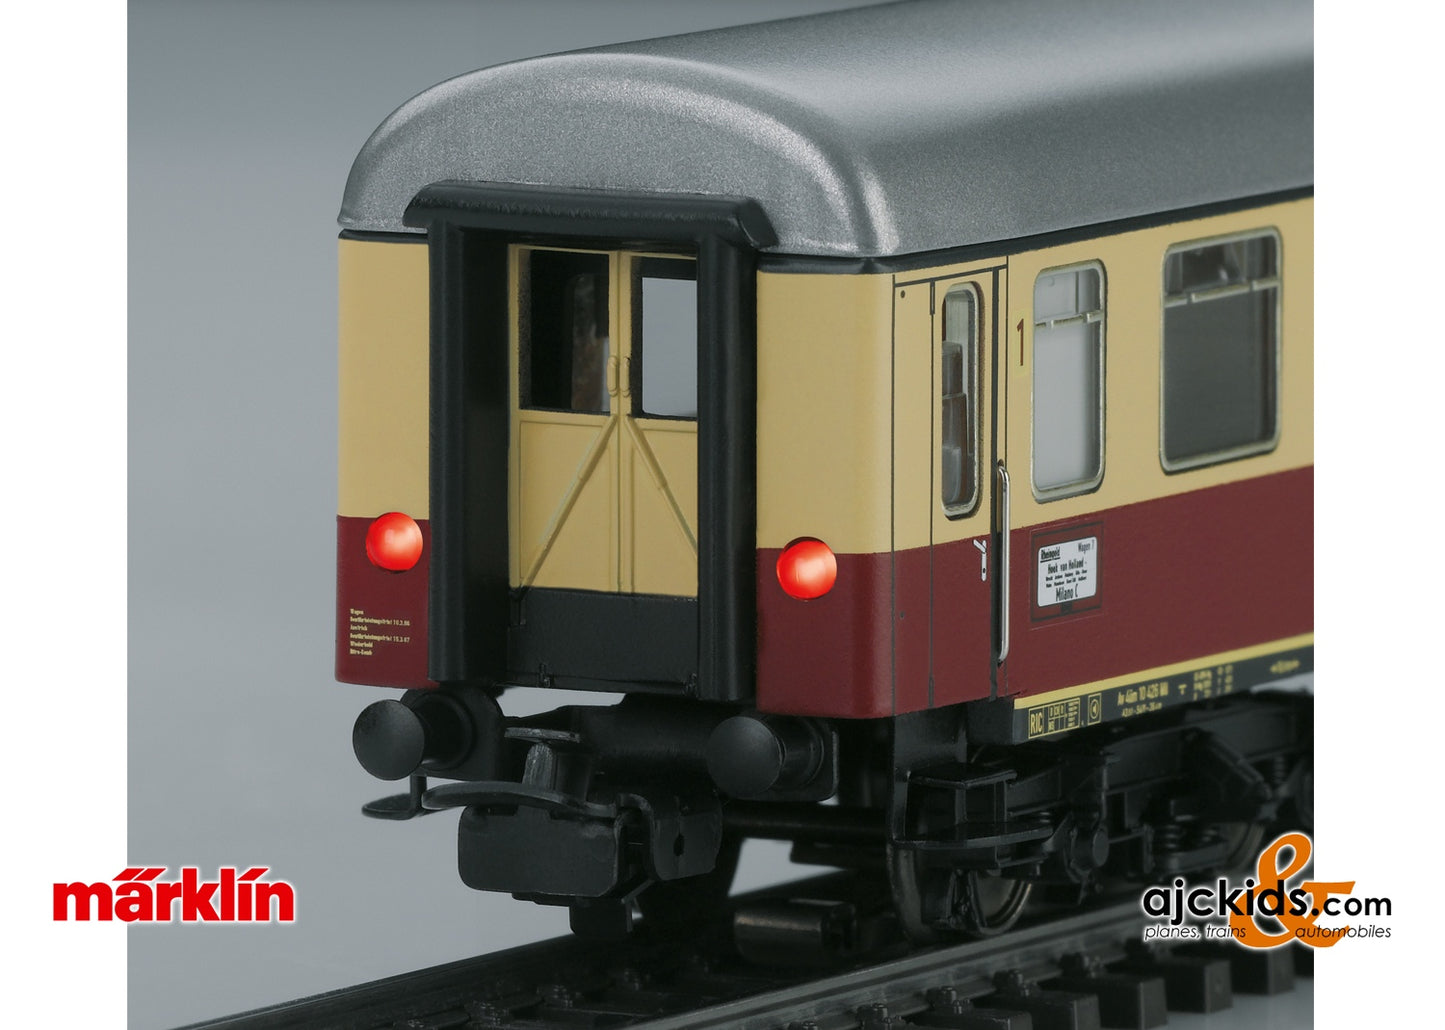 Marklin 40851 - Tin-Plate Rheingold Car Set